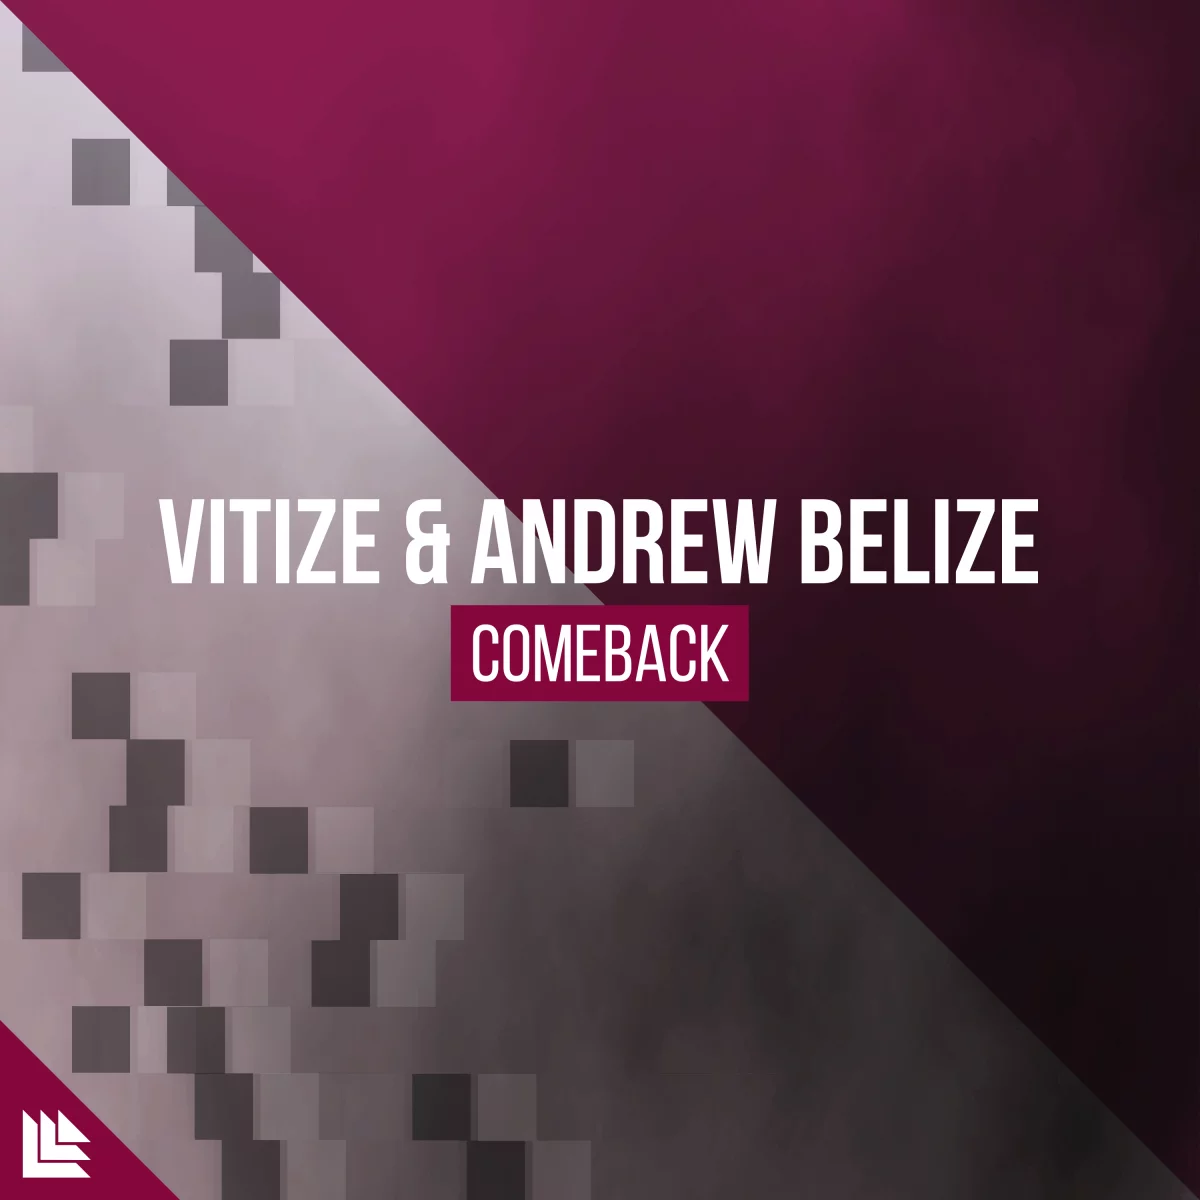 Comeback - VITIZE⁠⁠⁠ & Andrew Belize⁠